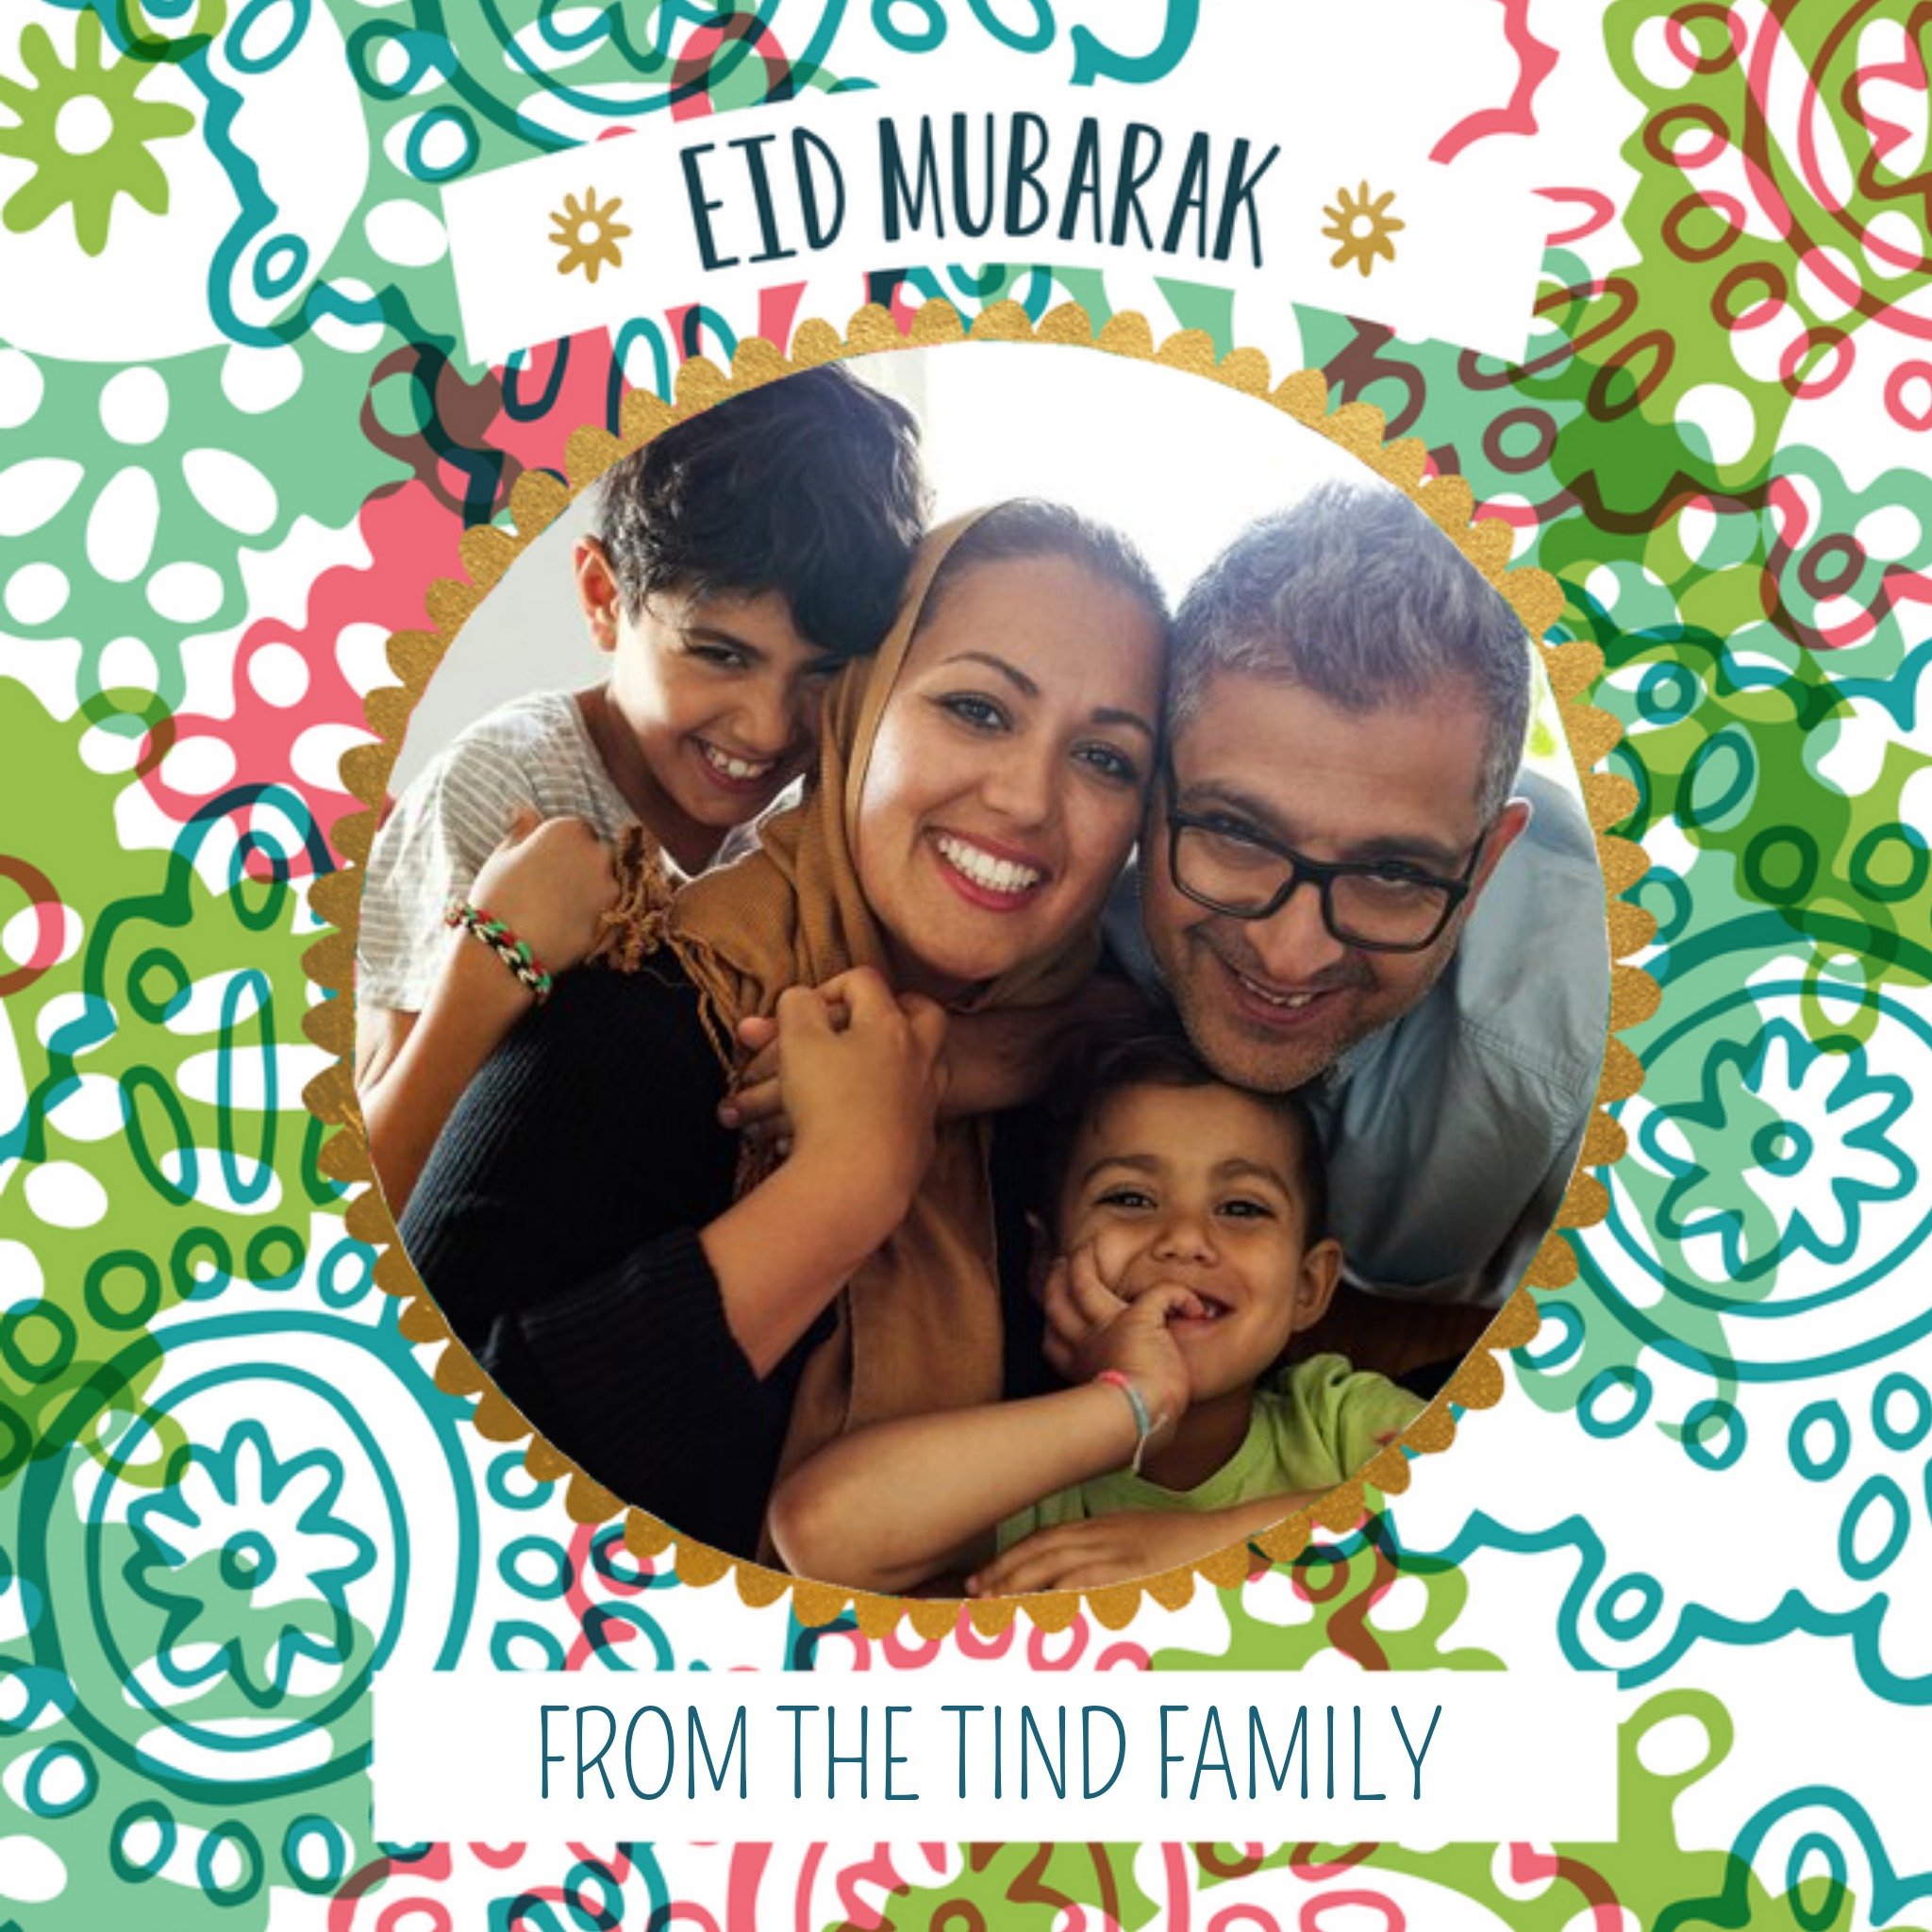 Moonpig Colourful Patterned Eid Mubarak Photo Card, Square